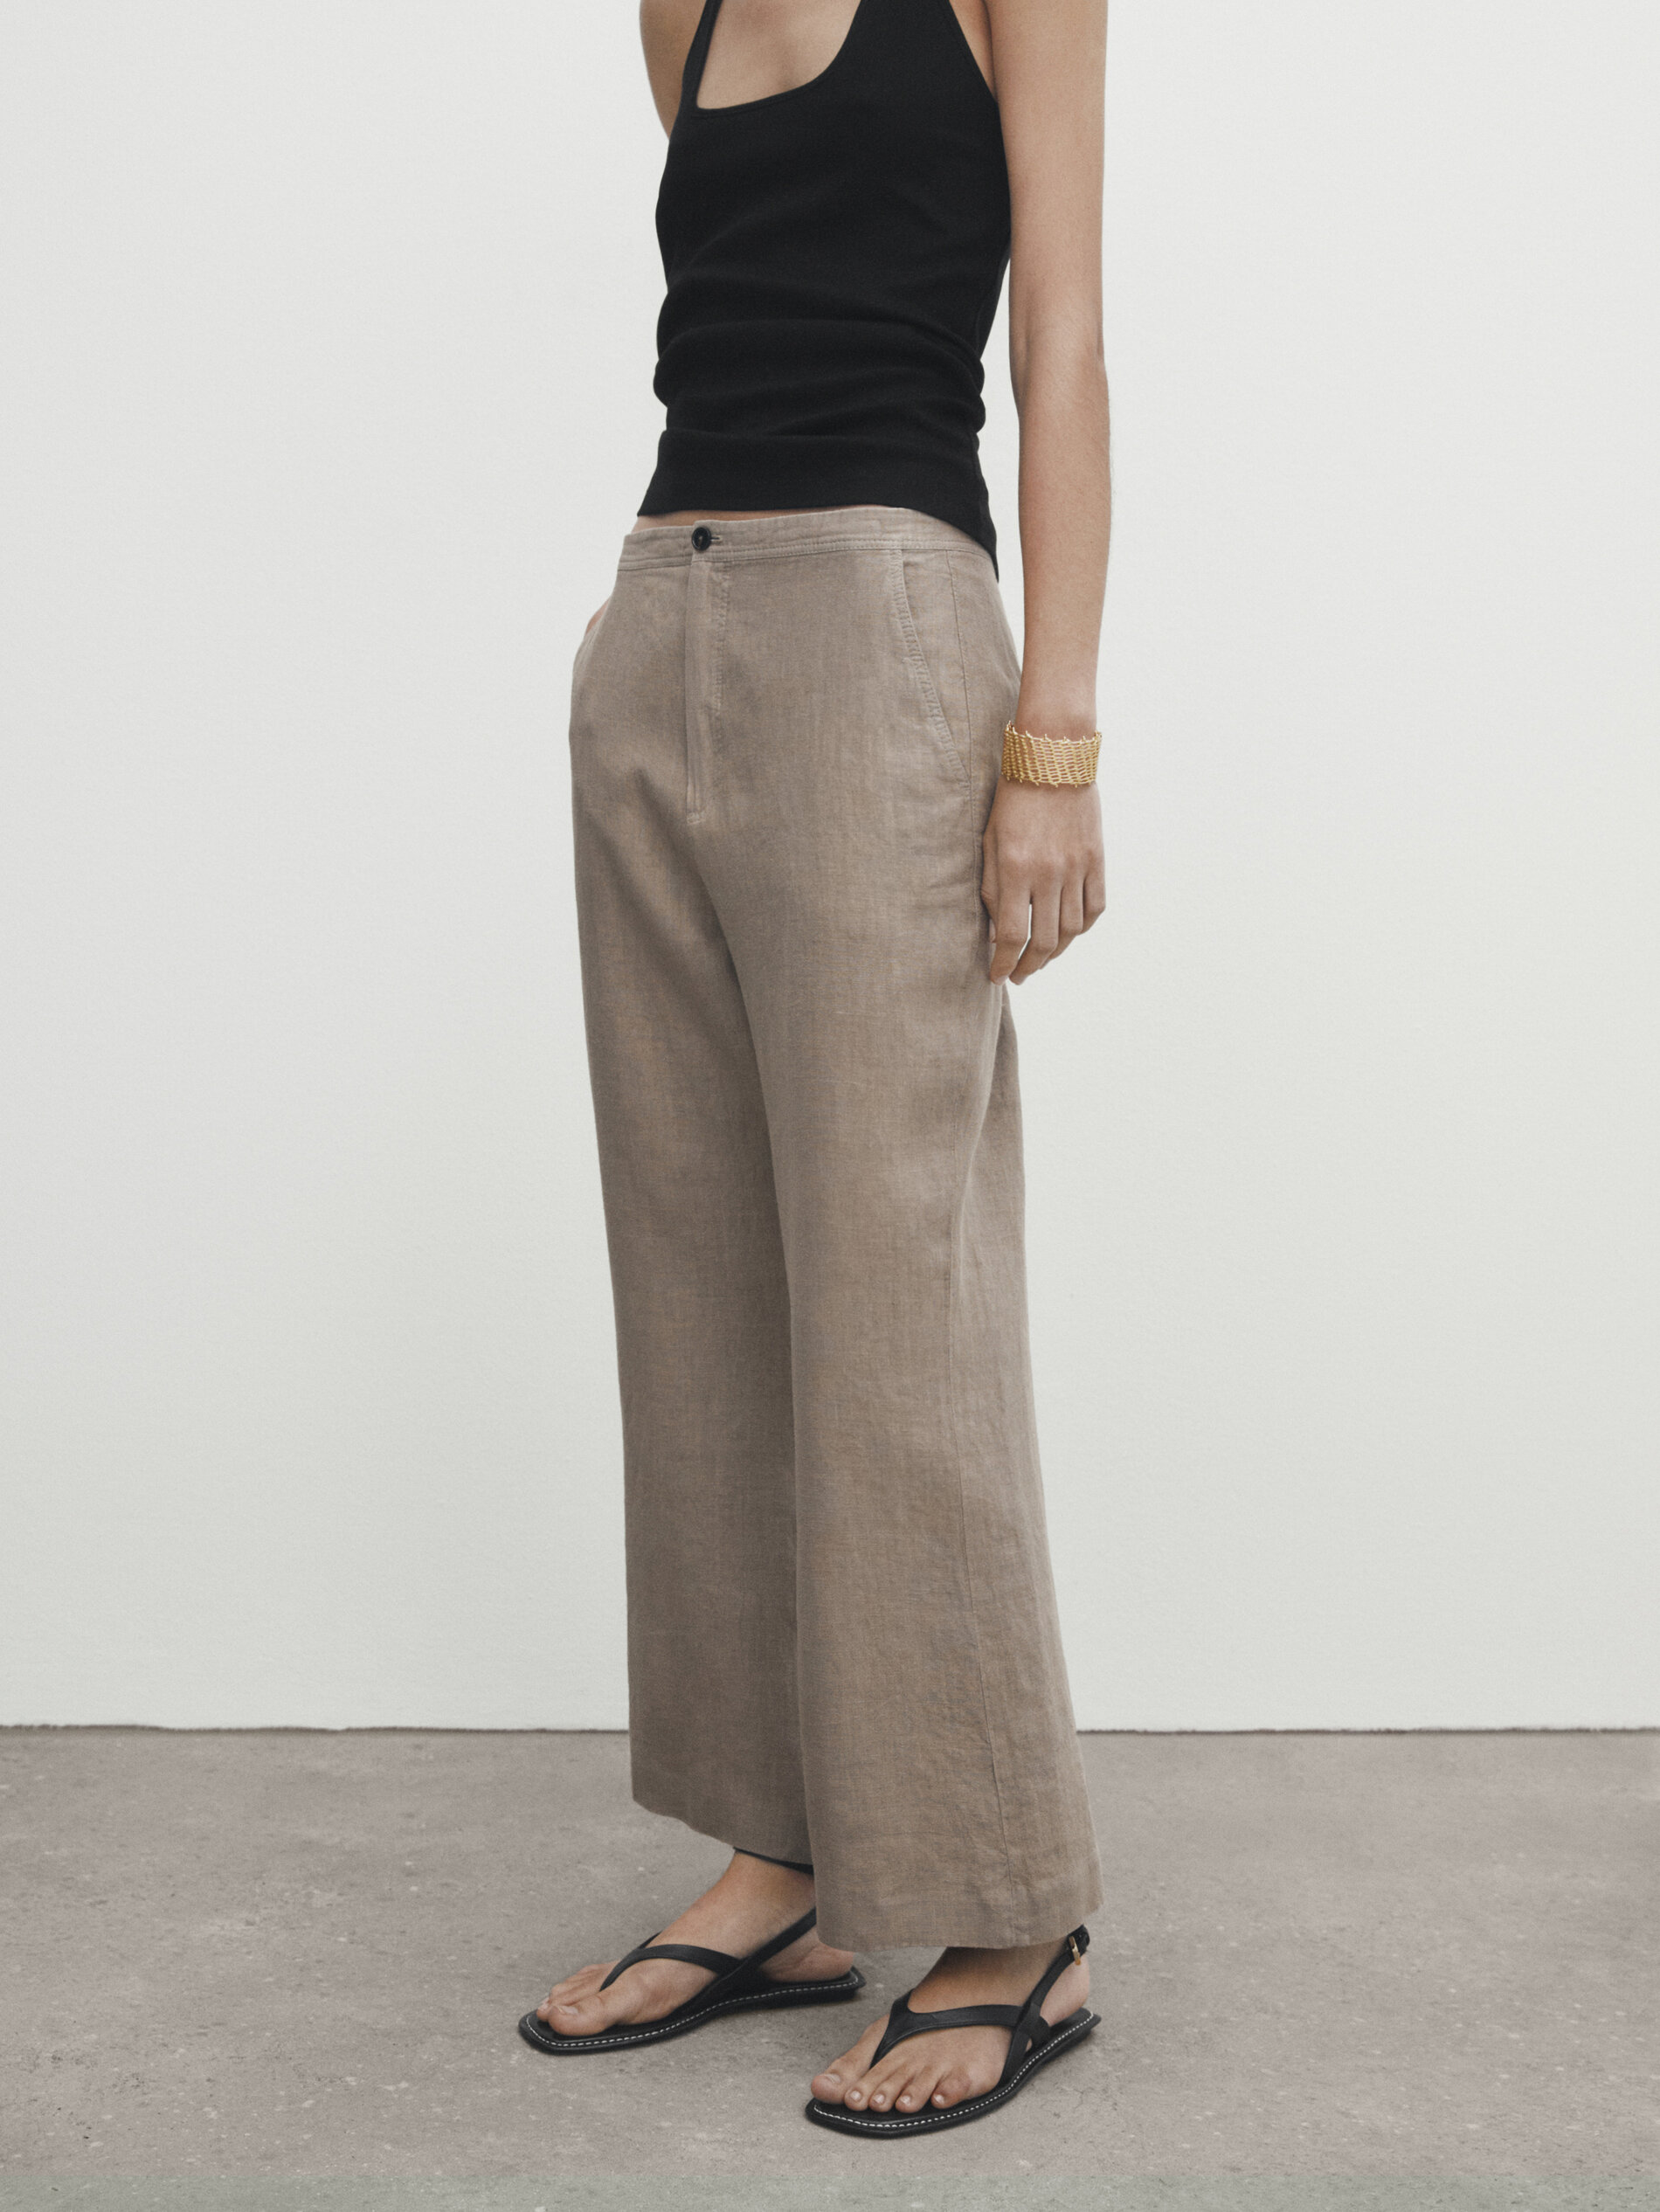 Massimo Dutti Women's White Linen Pants Size 34 | eBay